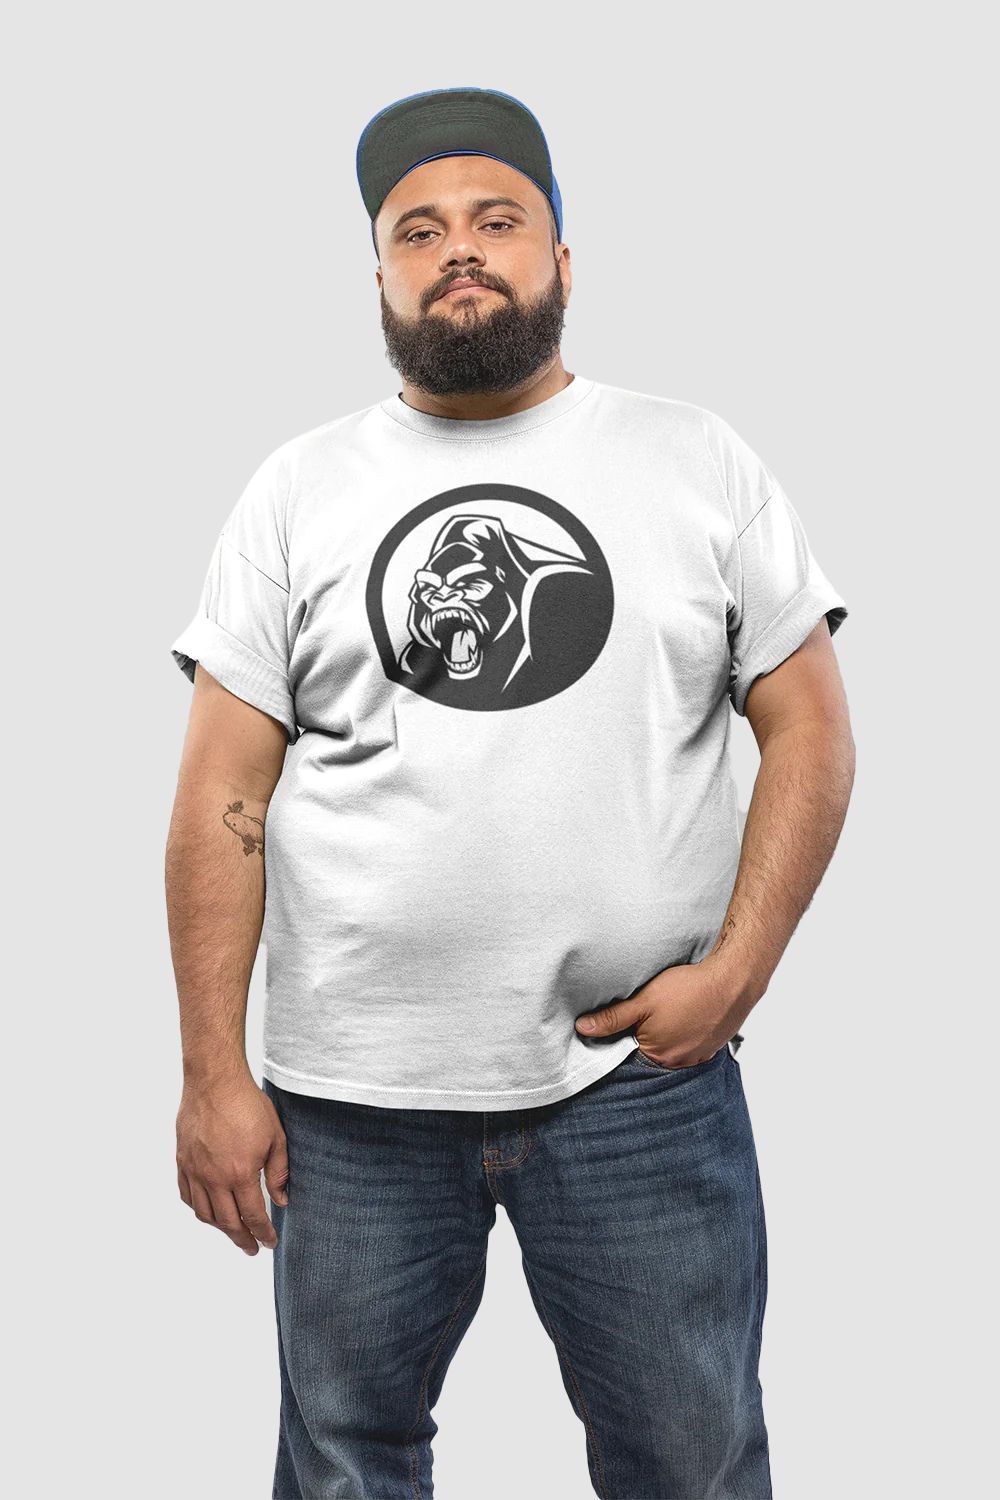 Angry Gorilla Graphic Printed White Tshirt